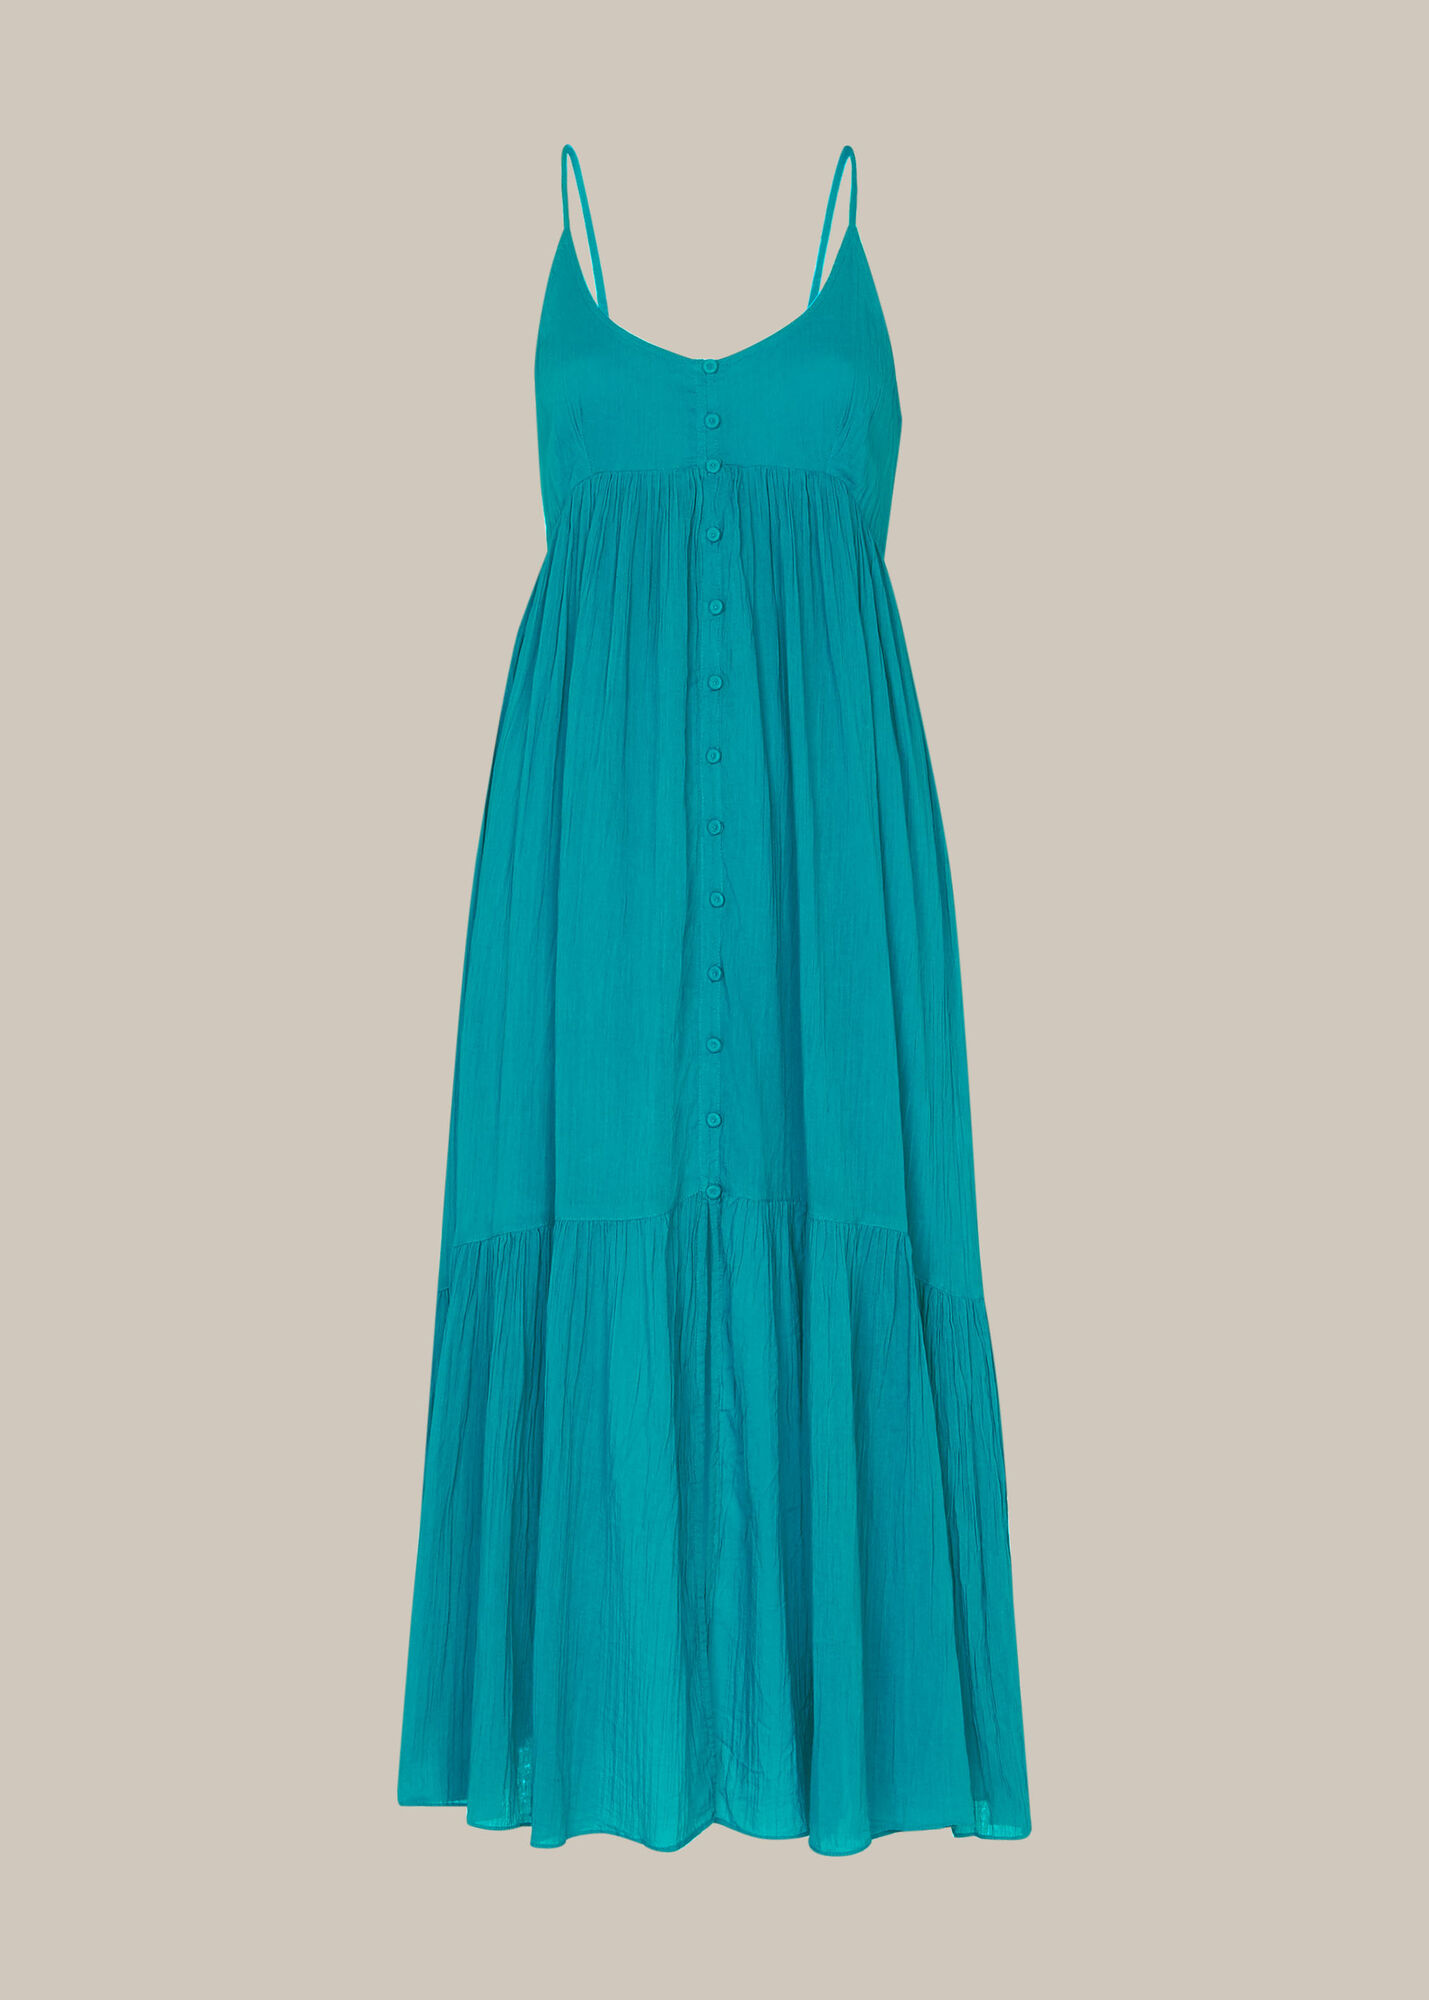 Turquoise Trapeze Cotton Voile Dress | WHISTLES